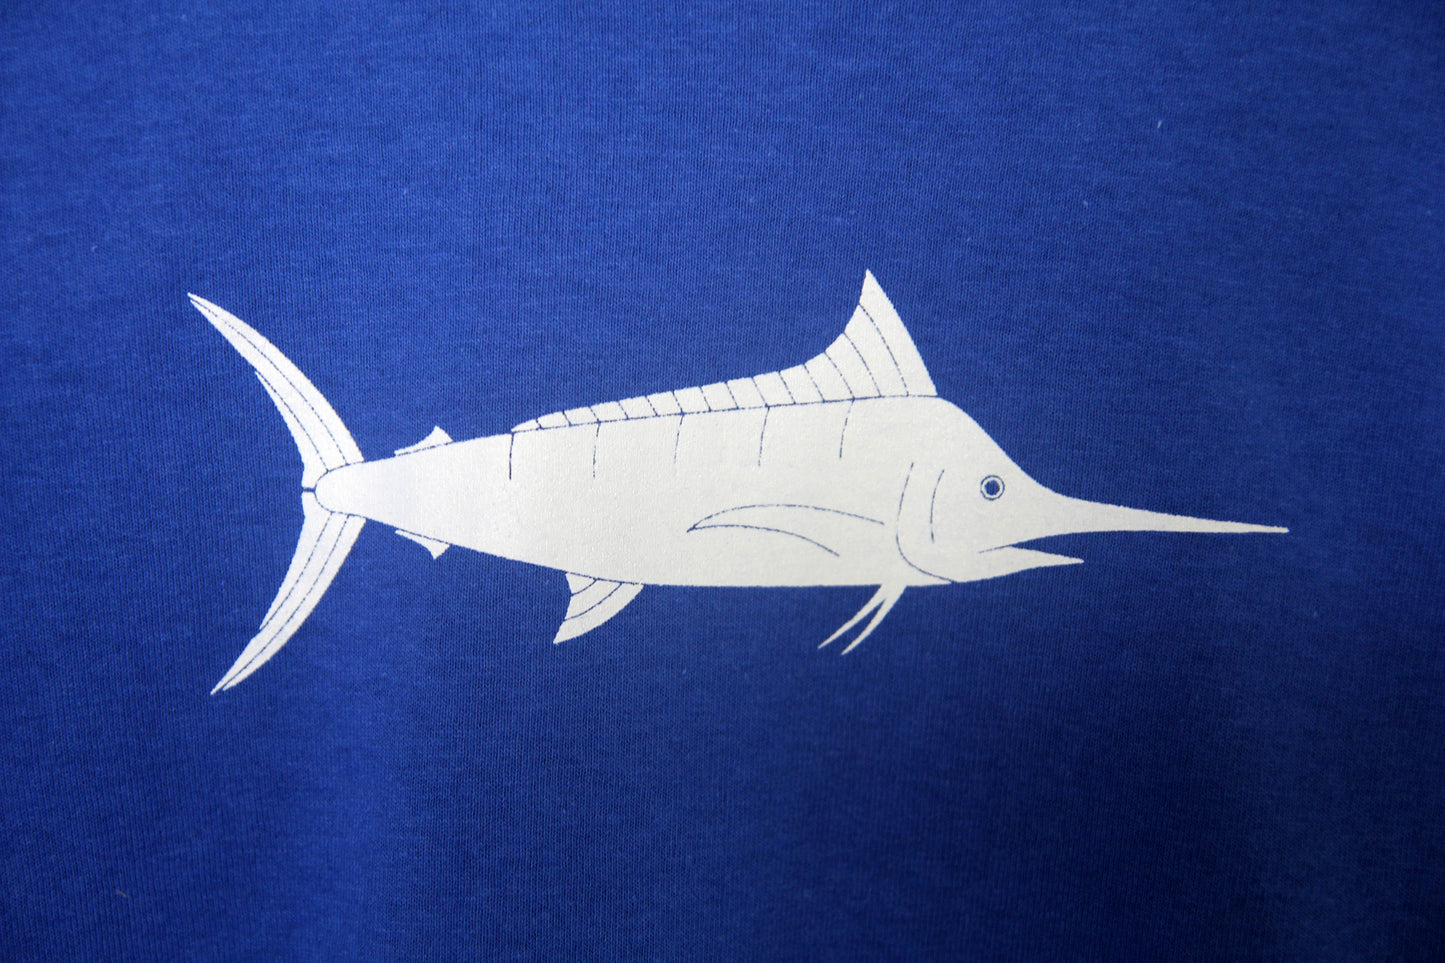 Blue Marlin Sun Dot Kids T-shirt